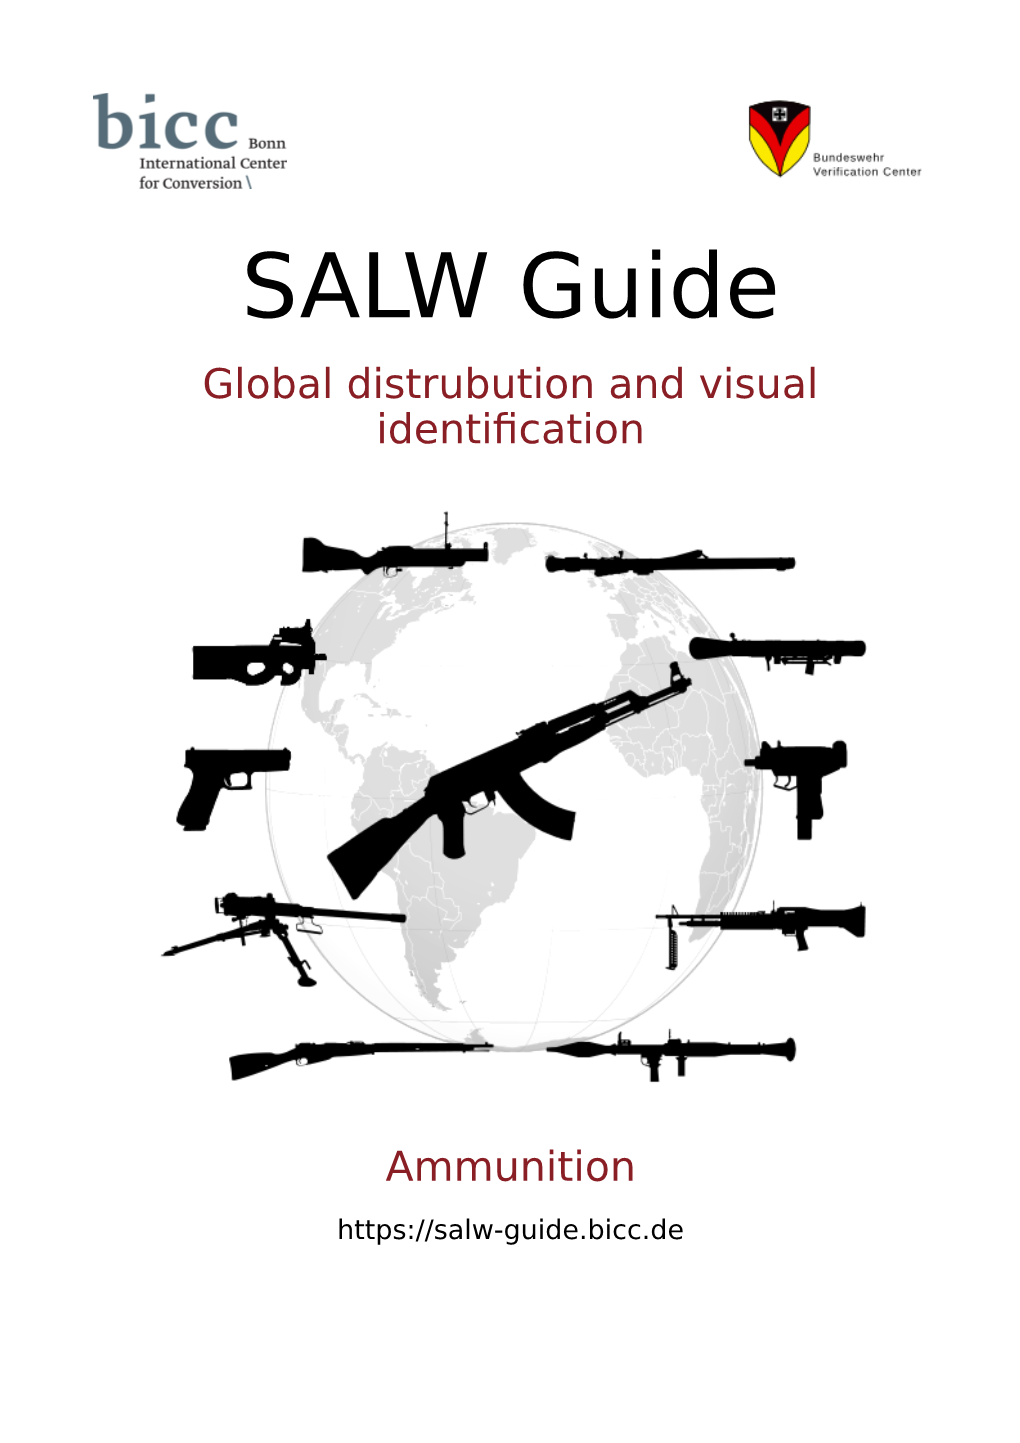 SALW Guide Global Distrubution and Visual Identification